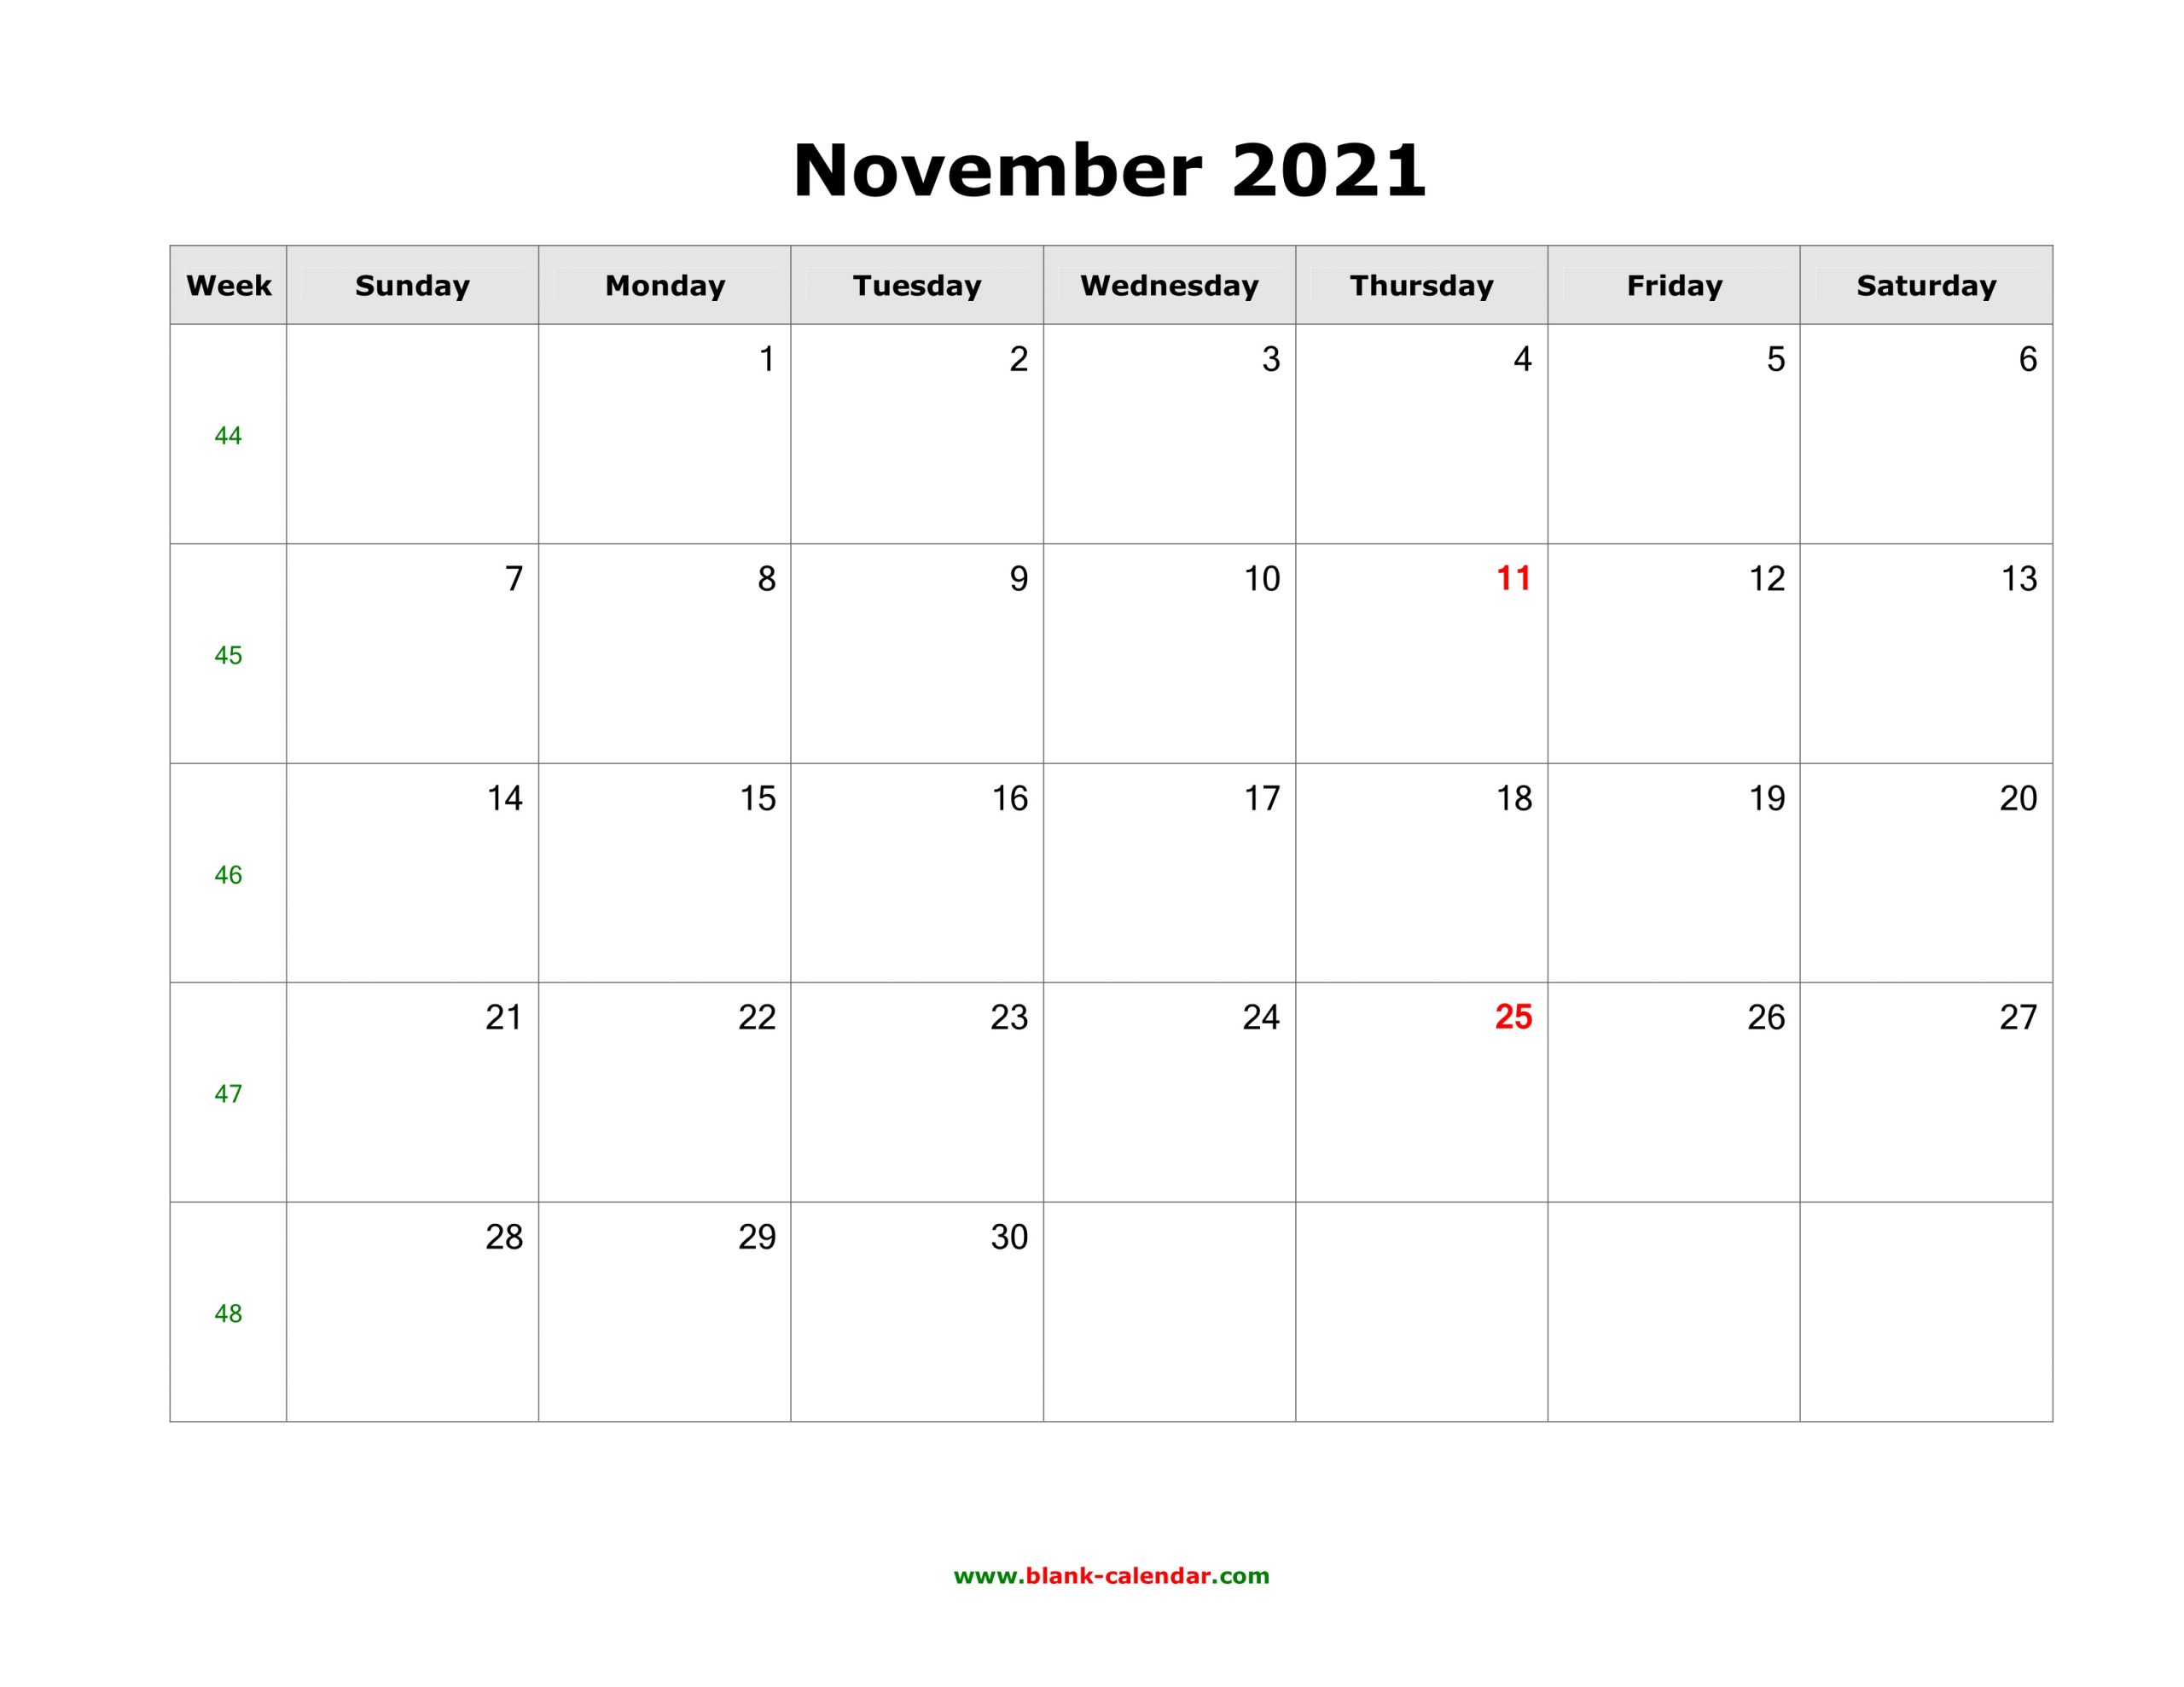 Download November 2021 Blank Calendar (Horizontal) Print November 2021 Calendar